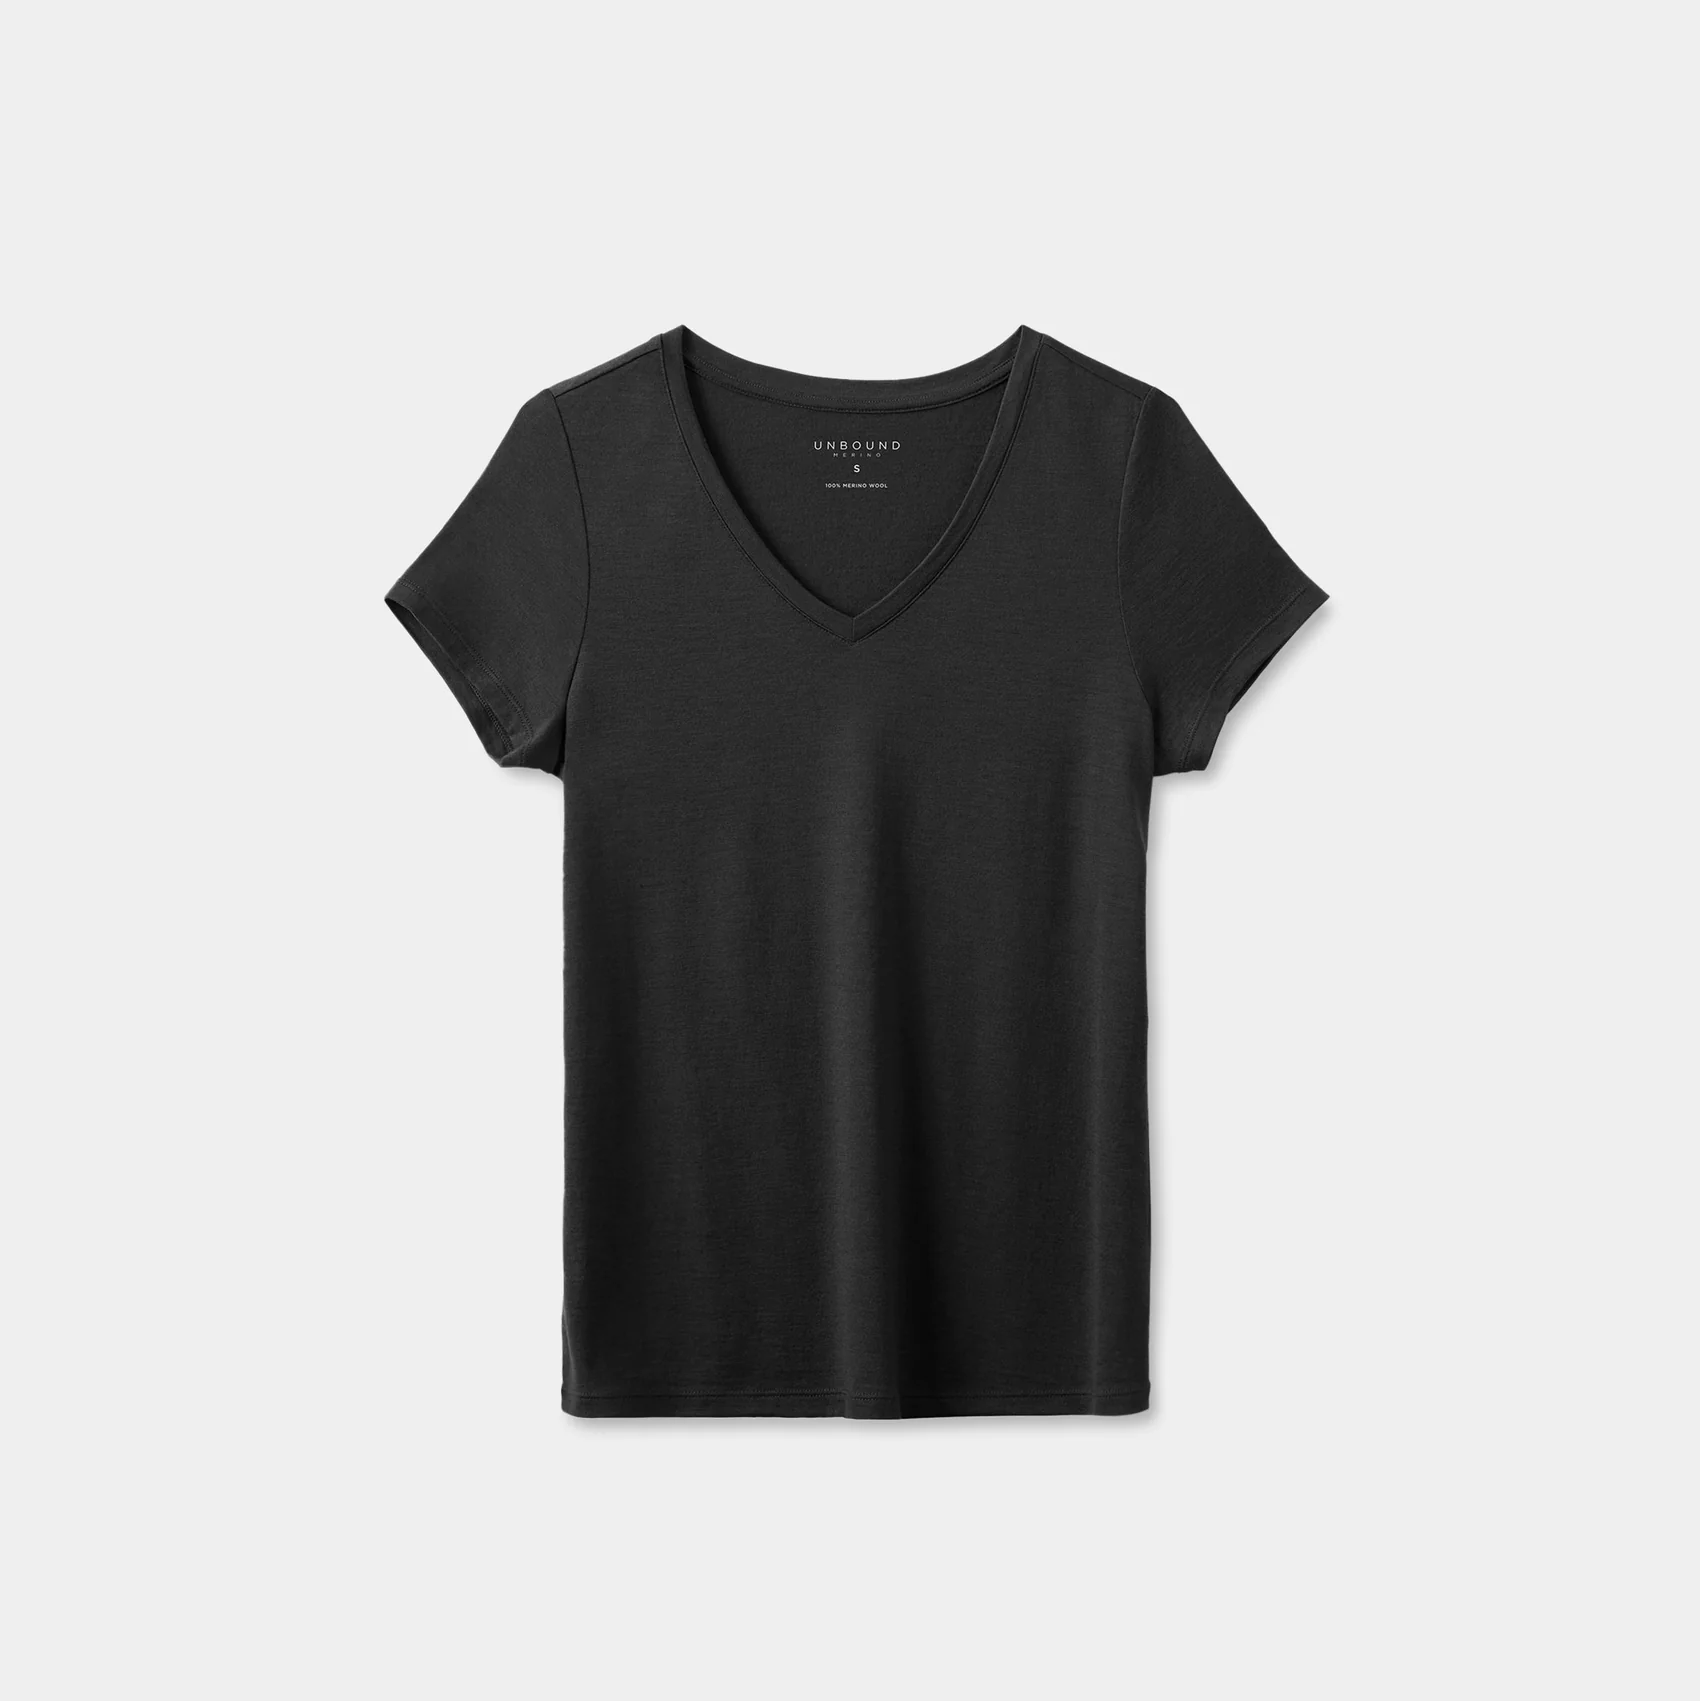 Unbound Merino + Women’s Merino Wool V-Neck T-Shirt